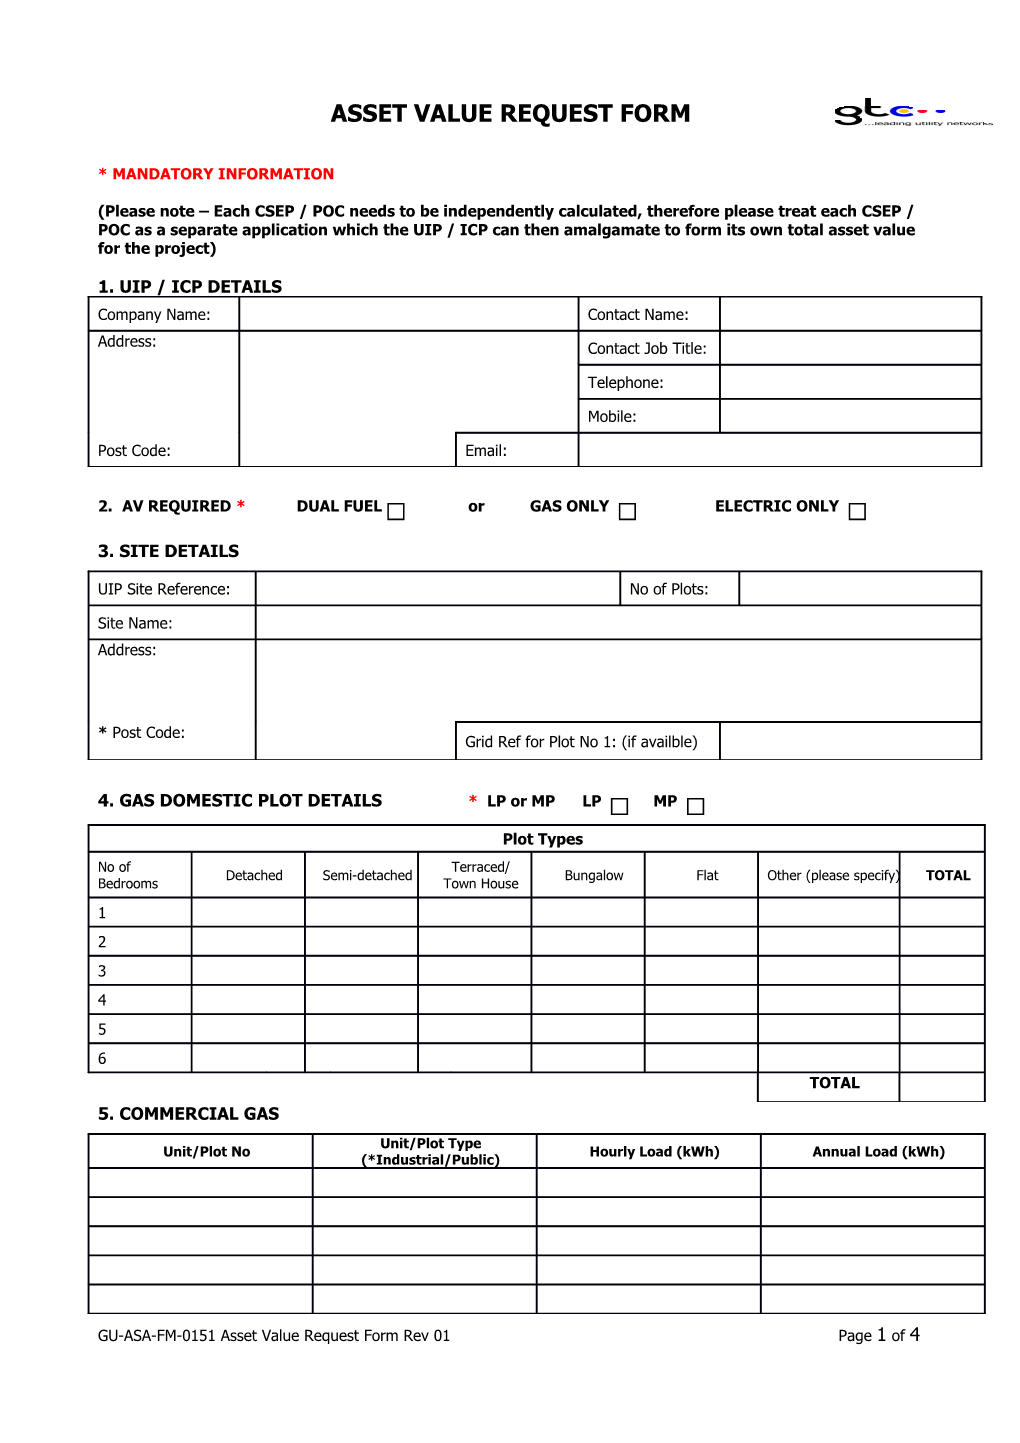 GU-ASA-FM-0151 Asset Value Request Form